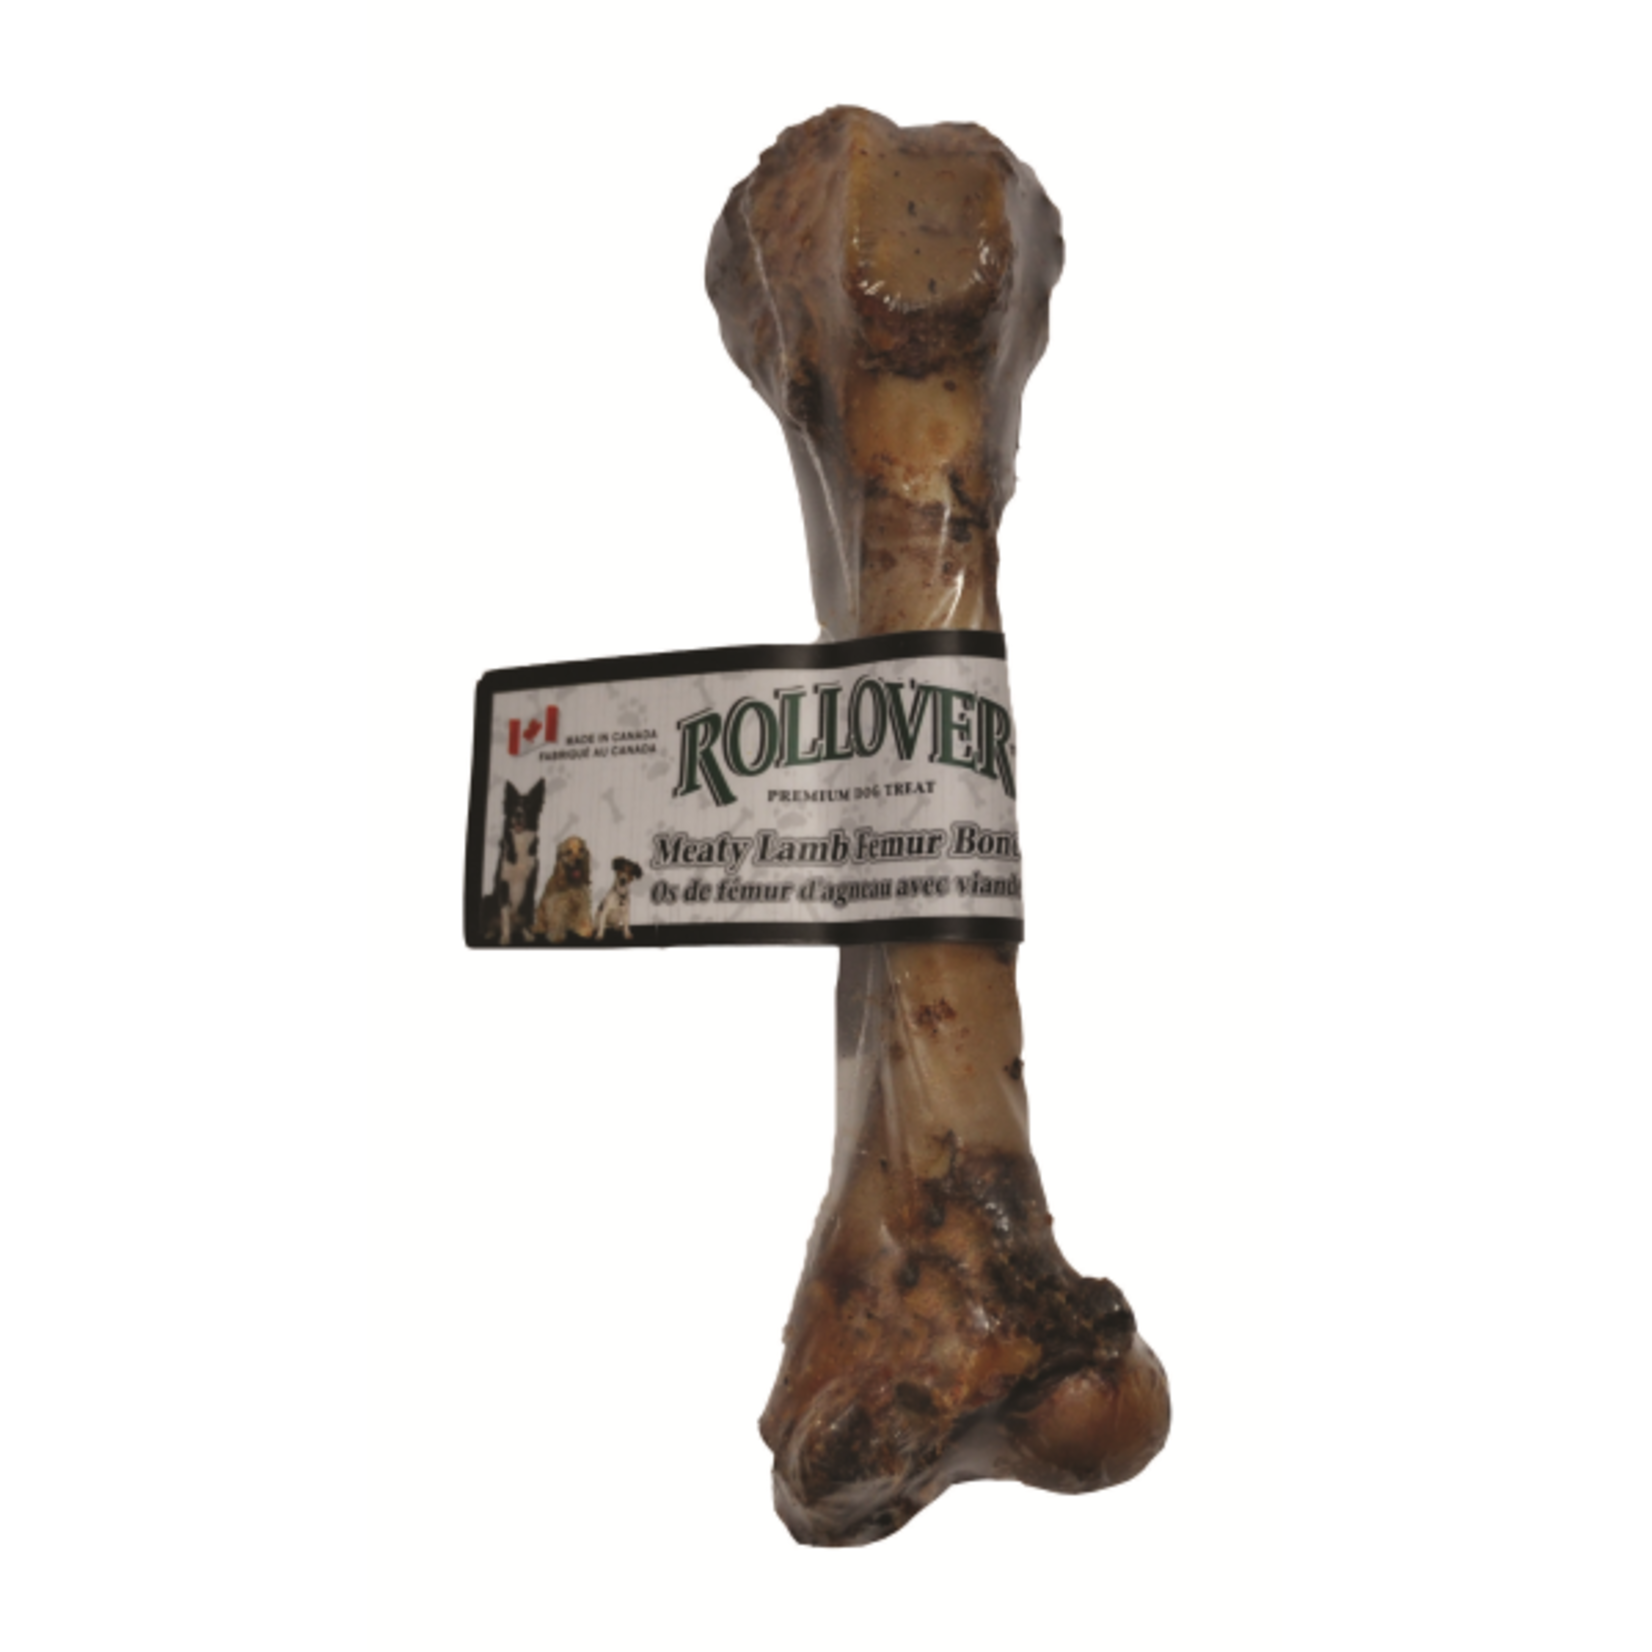 Rollover Rollover Meaty Lamb Femur Bone